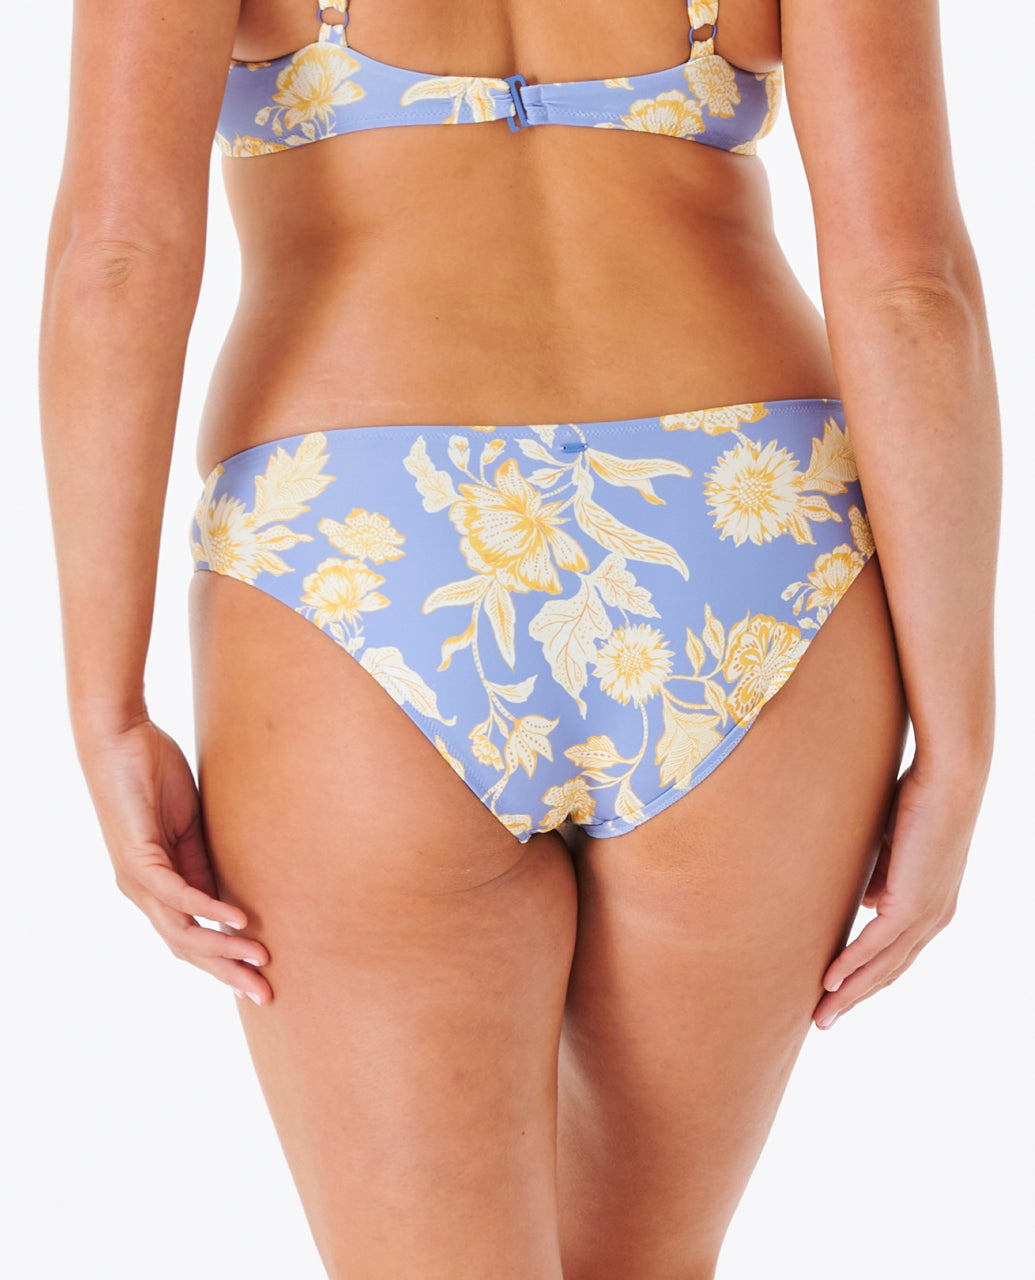 [SALE] Women's OCEANS TOGETHER FULL PANT Bikini Set Bottoms